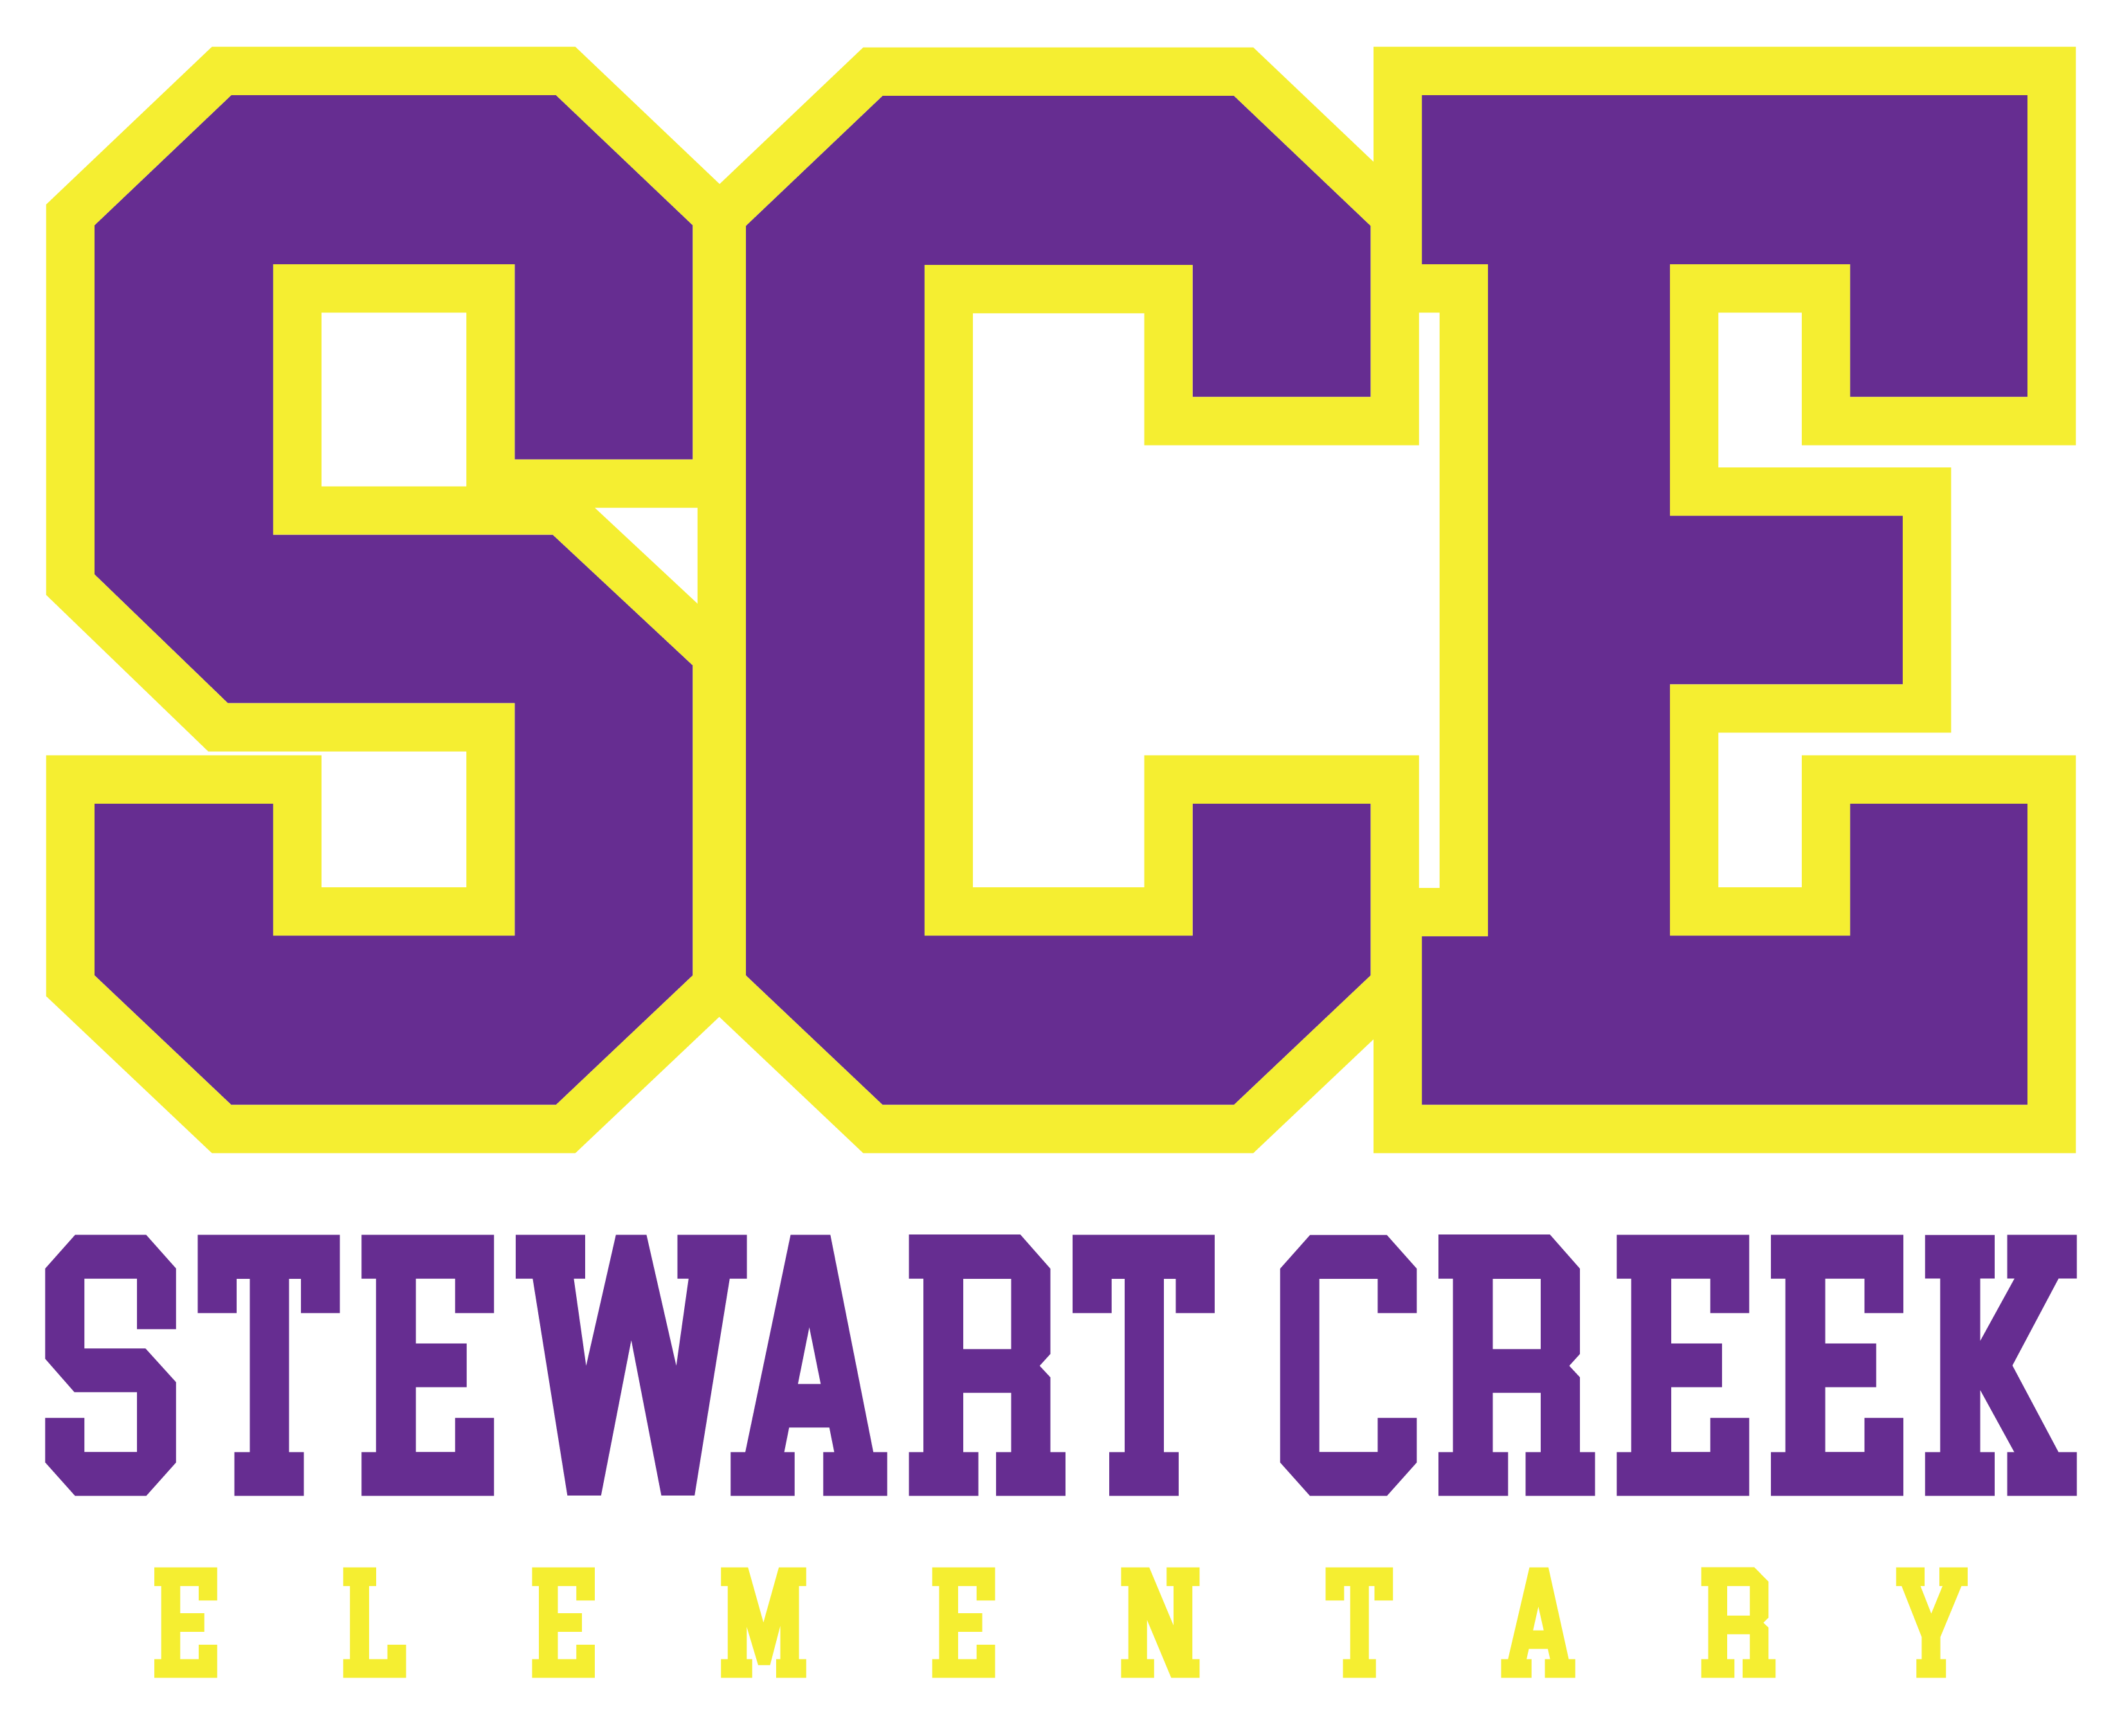 Stewart Creek logo